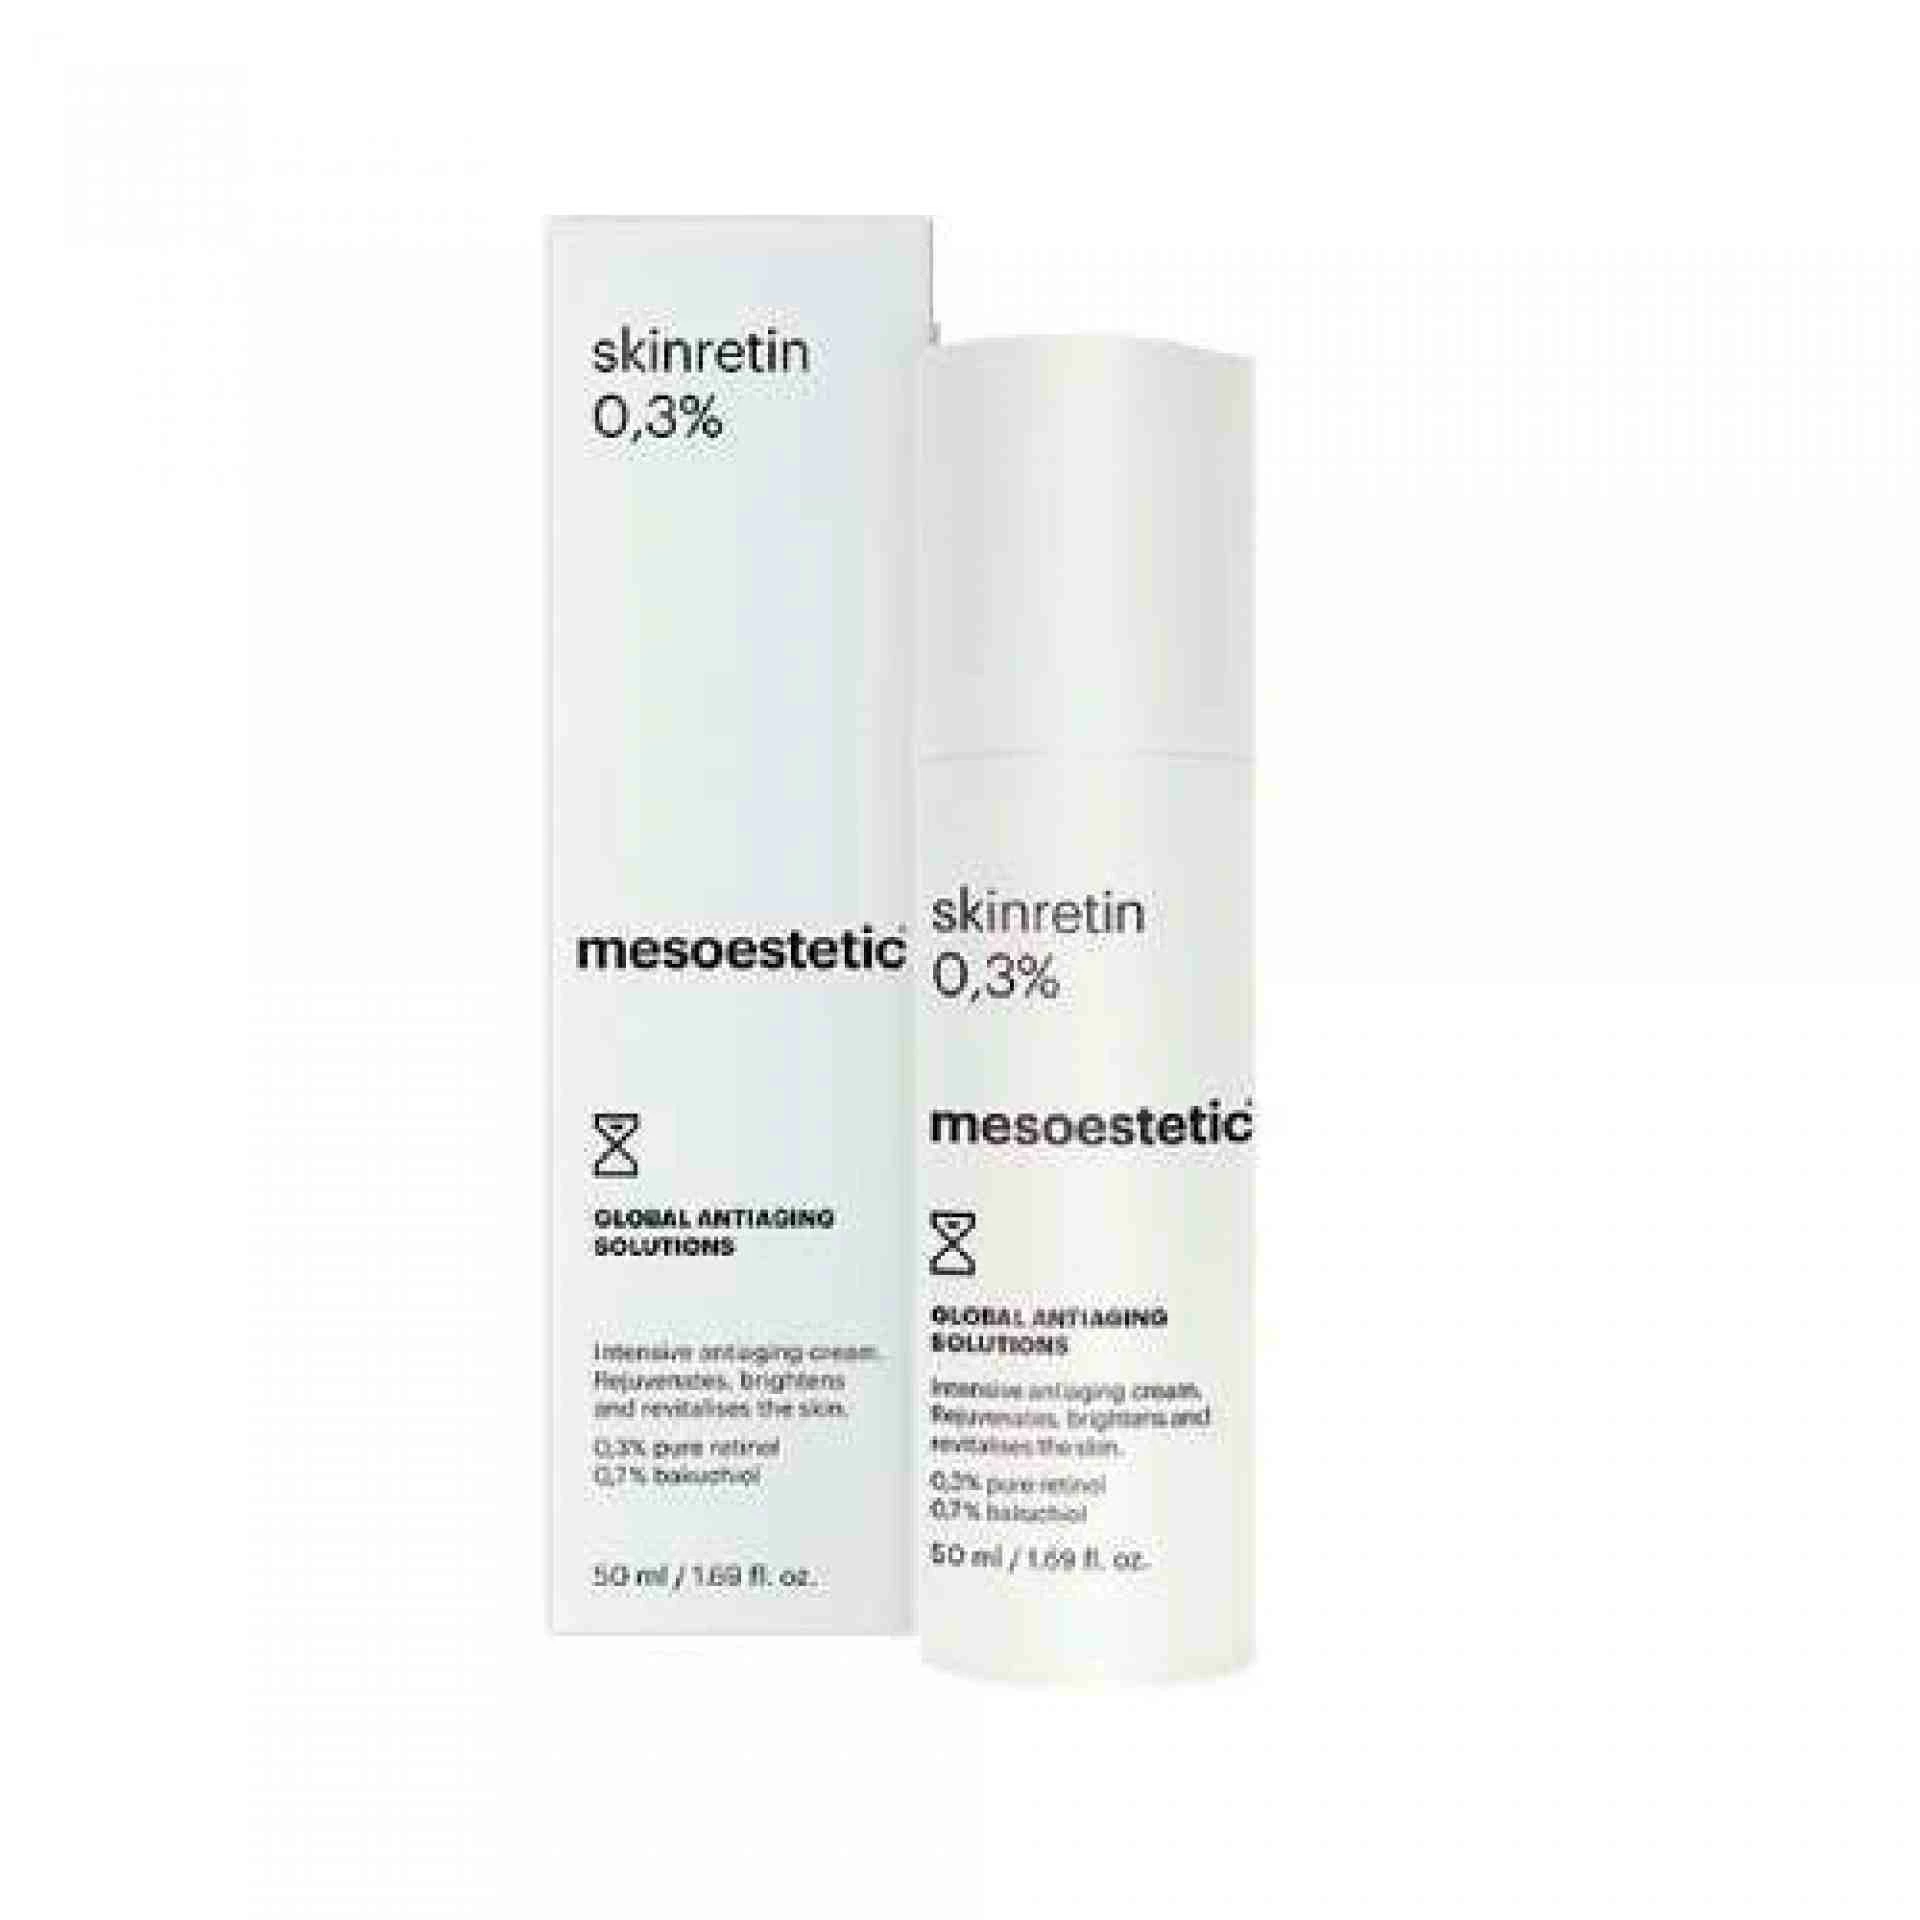 Skinretin 0,3% | Crema retinol puro 50ml - Global Antiaging Solutions - Mesoestetic ®